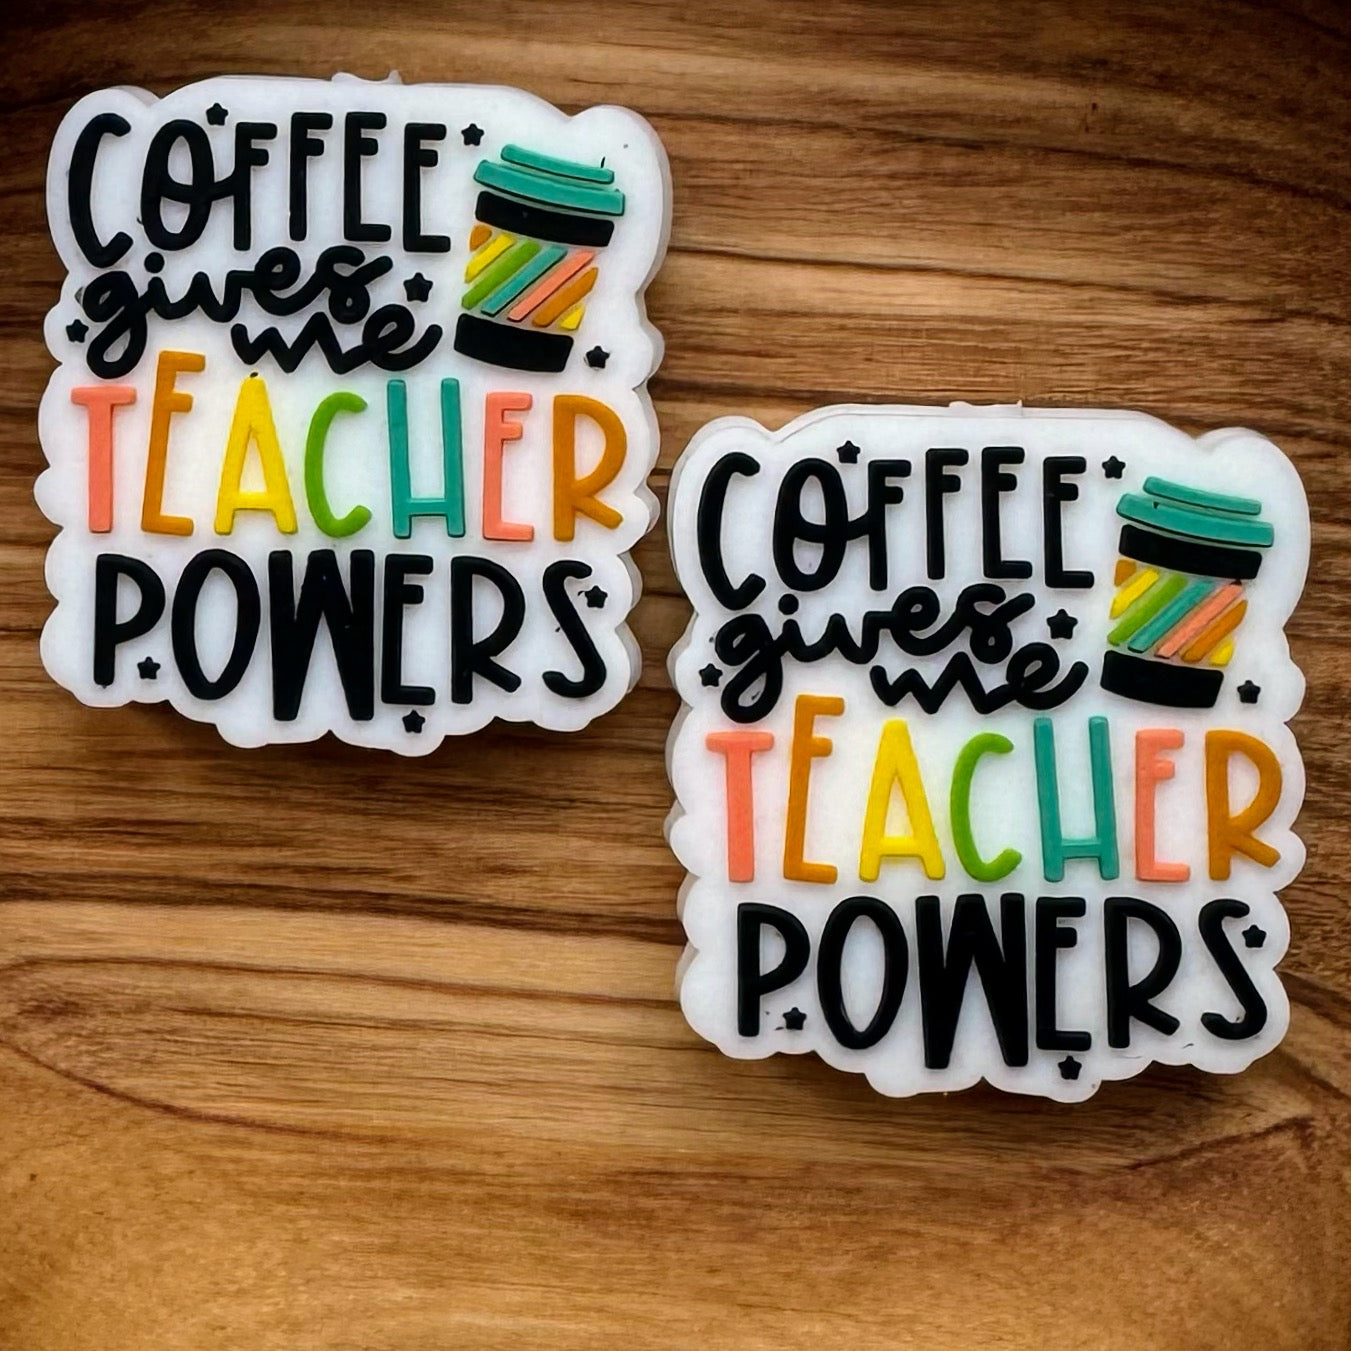 Coffee Gives Me Teacher Powers Focal